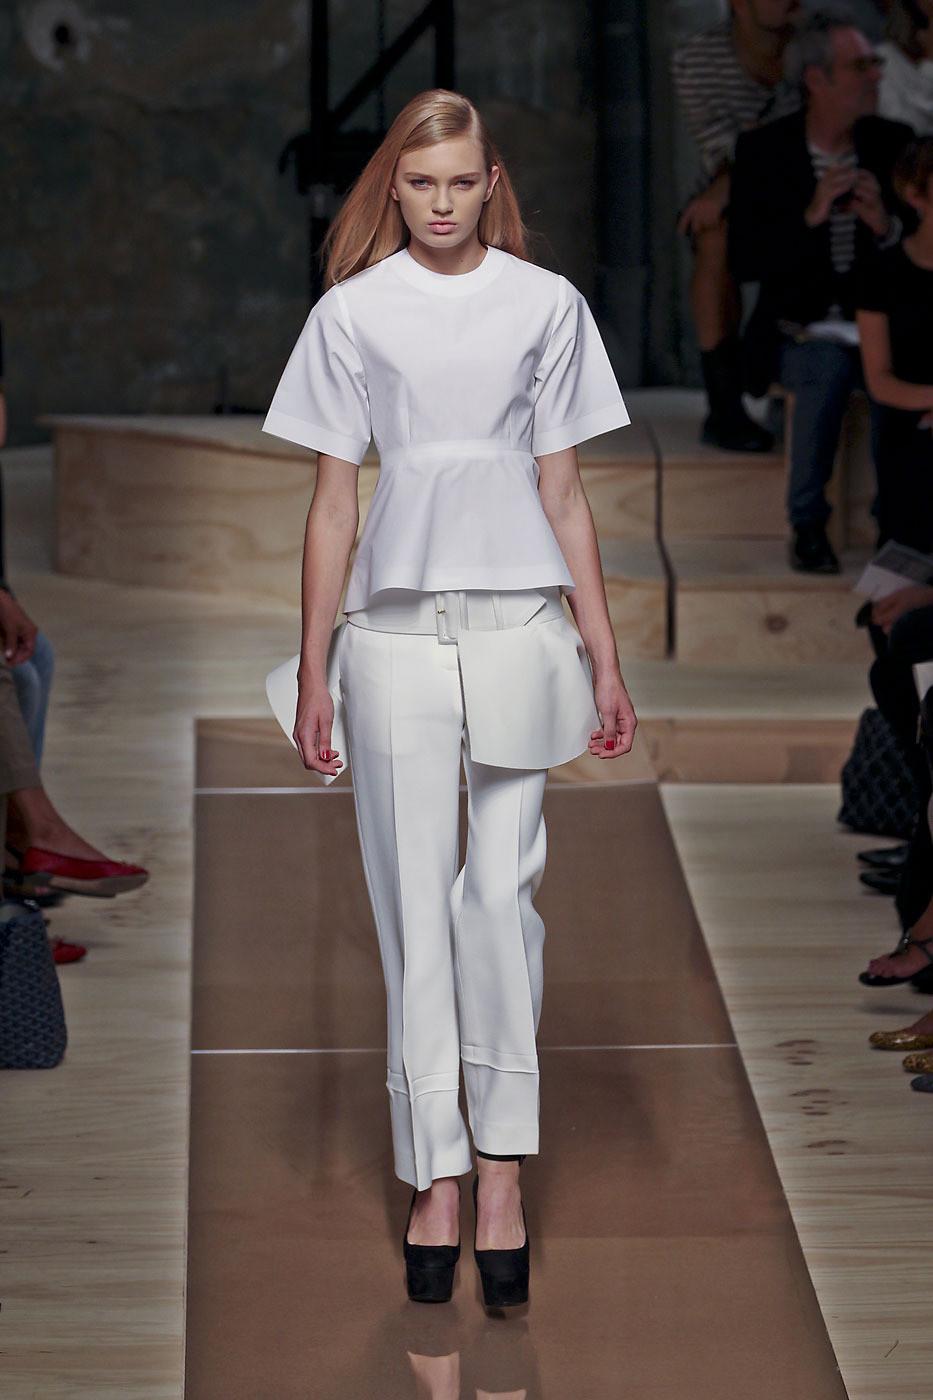 Women's CELINE by PHOEBE PHILO white cotton runway shirt with peplum